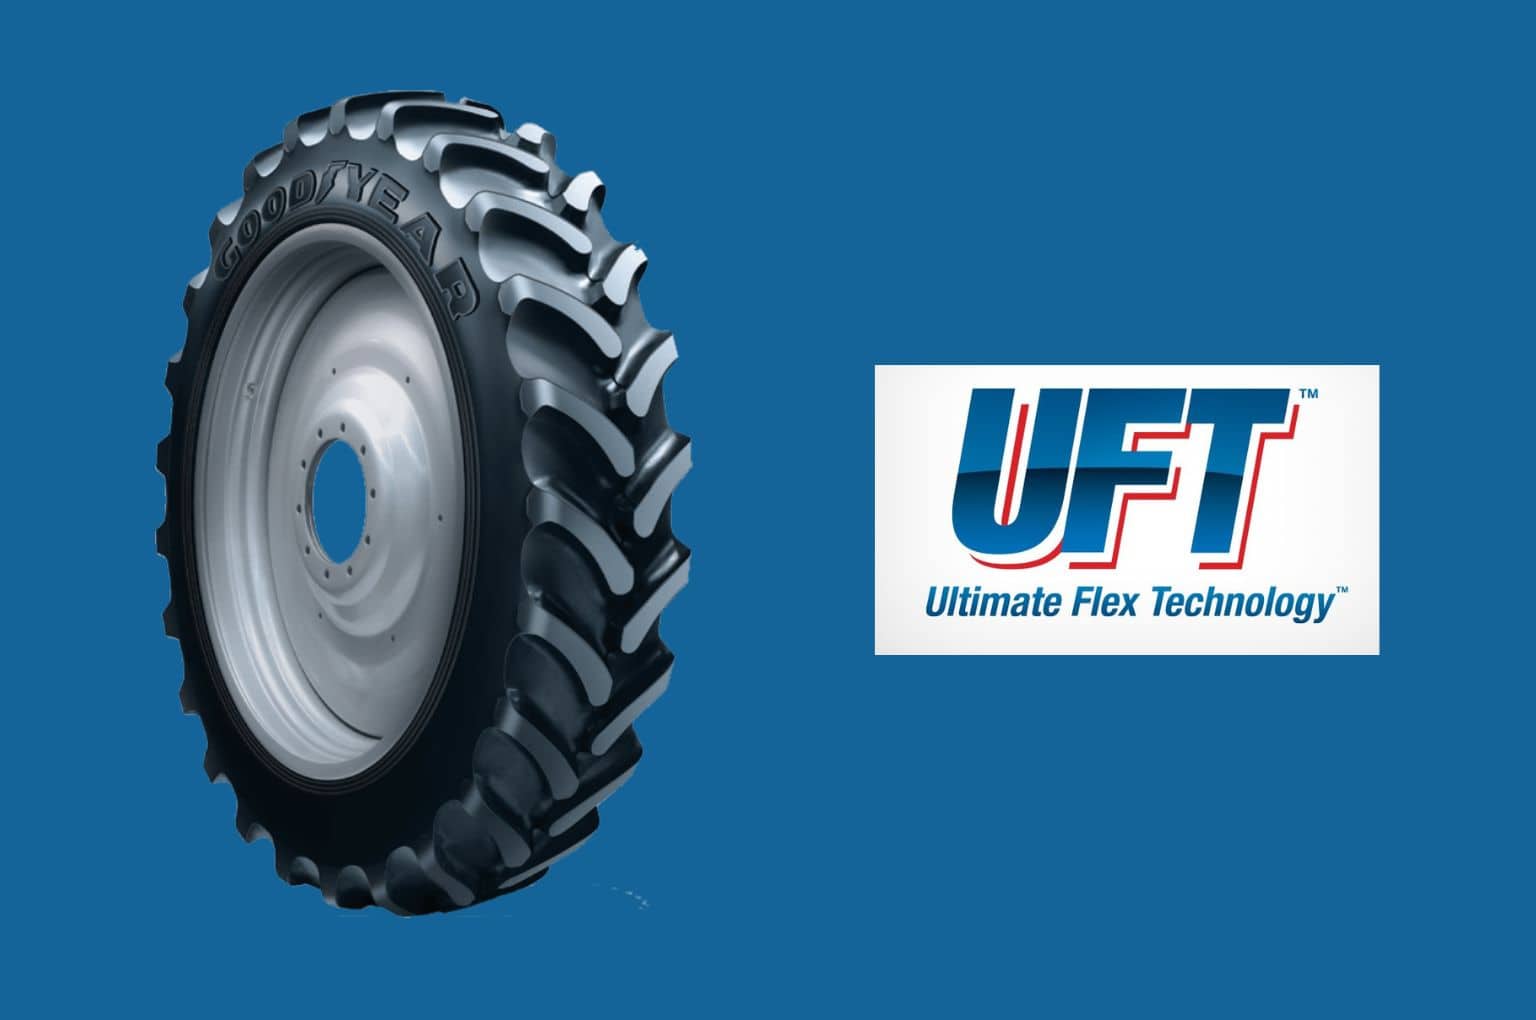 Titan launches UFT technology